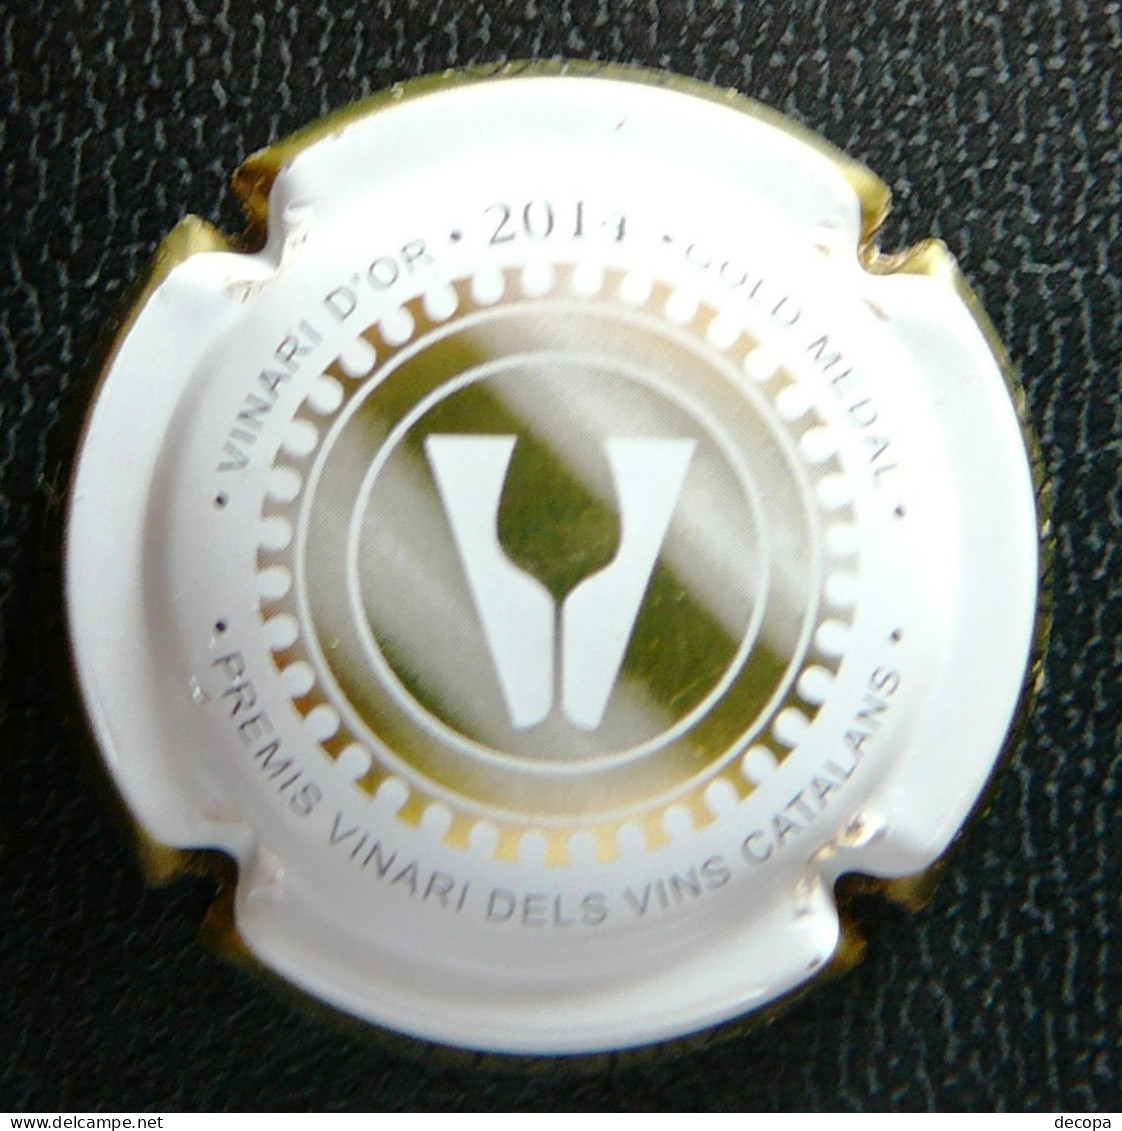 (dc-057) Capsule Cava Pere Olivella Galimany - Gold Medal 2014   -  Placa Premis Vinari Dels Vins Catalans - Mousseux